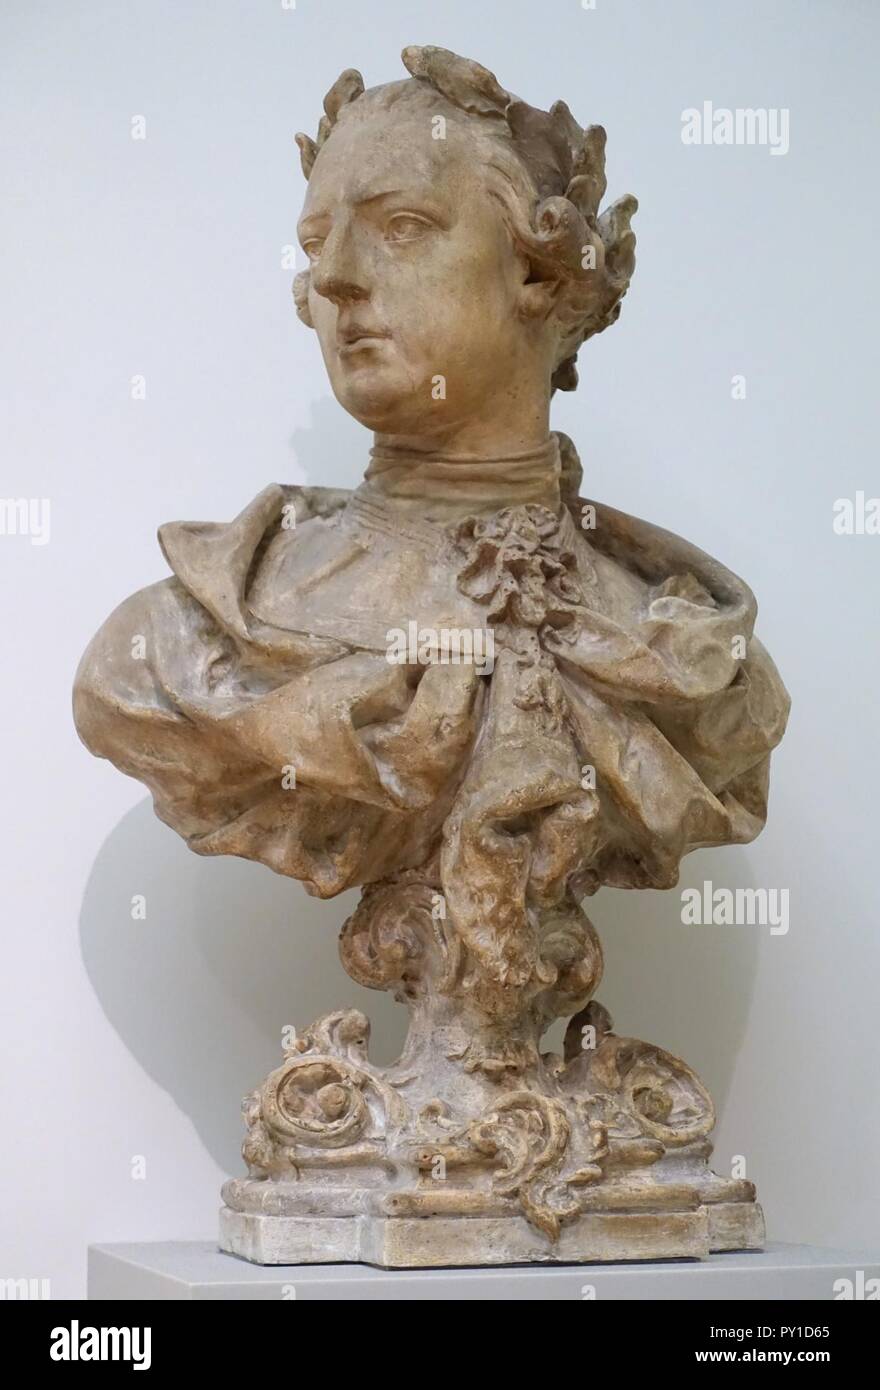 Bust of Emperor Joseph II by Franz Xaver Messerschmidt, Vienna, c. 1765-1770, plaster Stock Photo